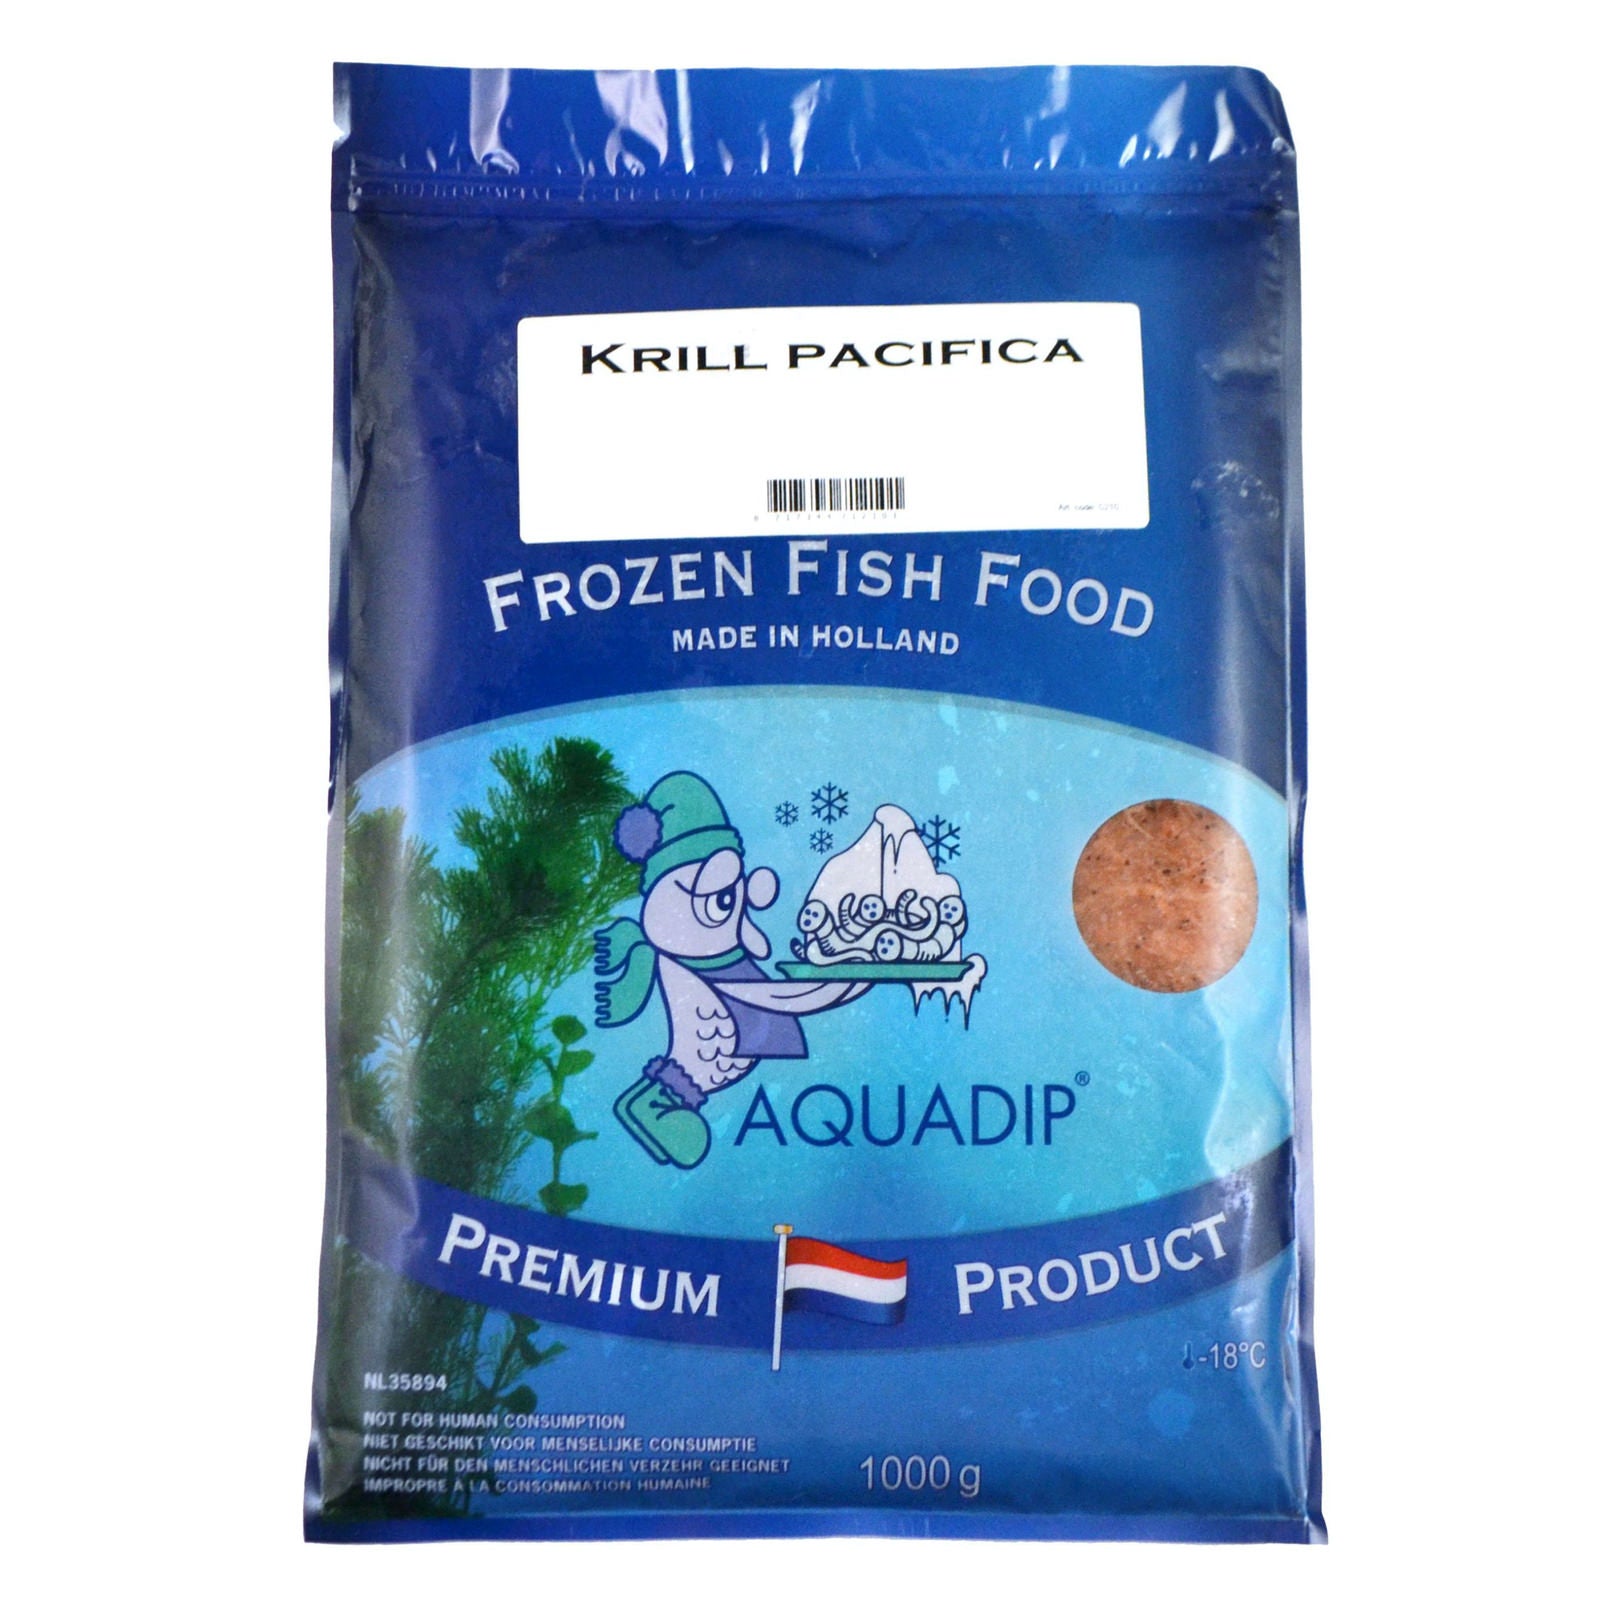 Frozen Krill - Reefphyto Ltd